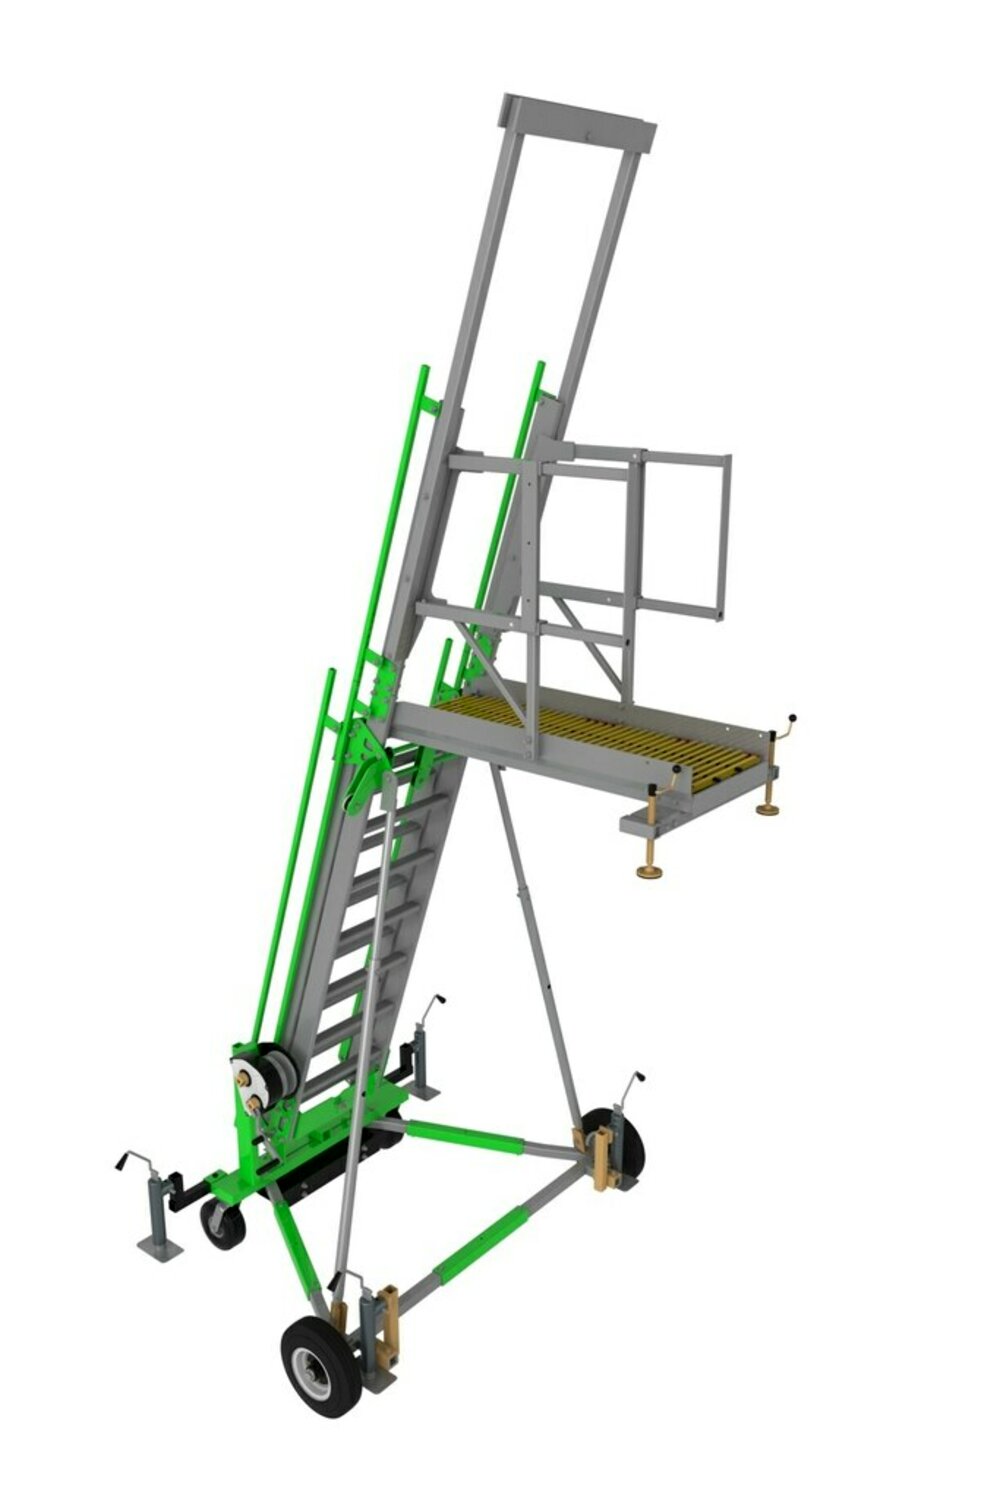 7012755906 - 3M DBI-SALA Flexiguard Freestanding Ladder Adjustable Height Access Anchor System 8567717, 2 User, 14.5 - 23 ft